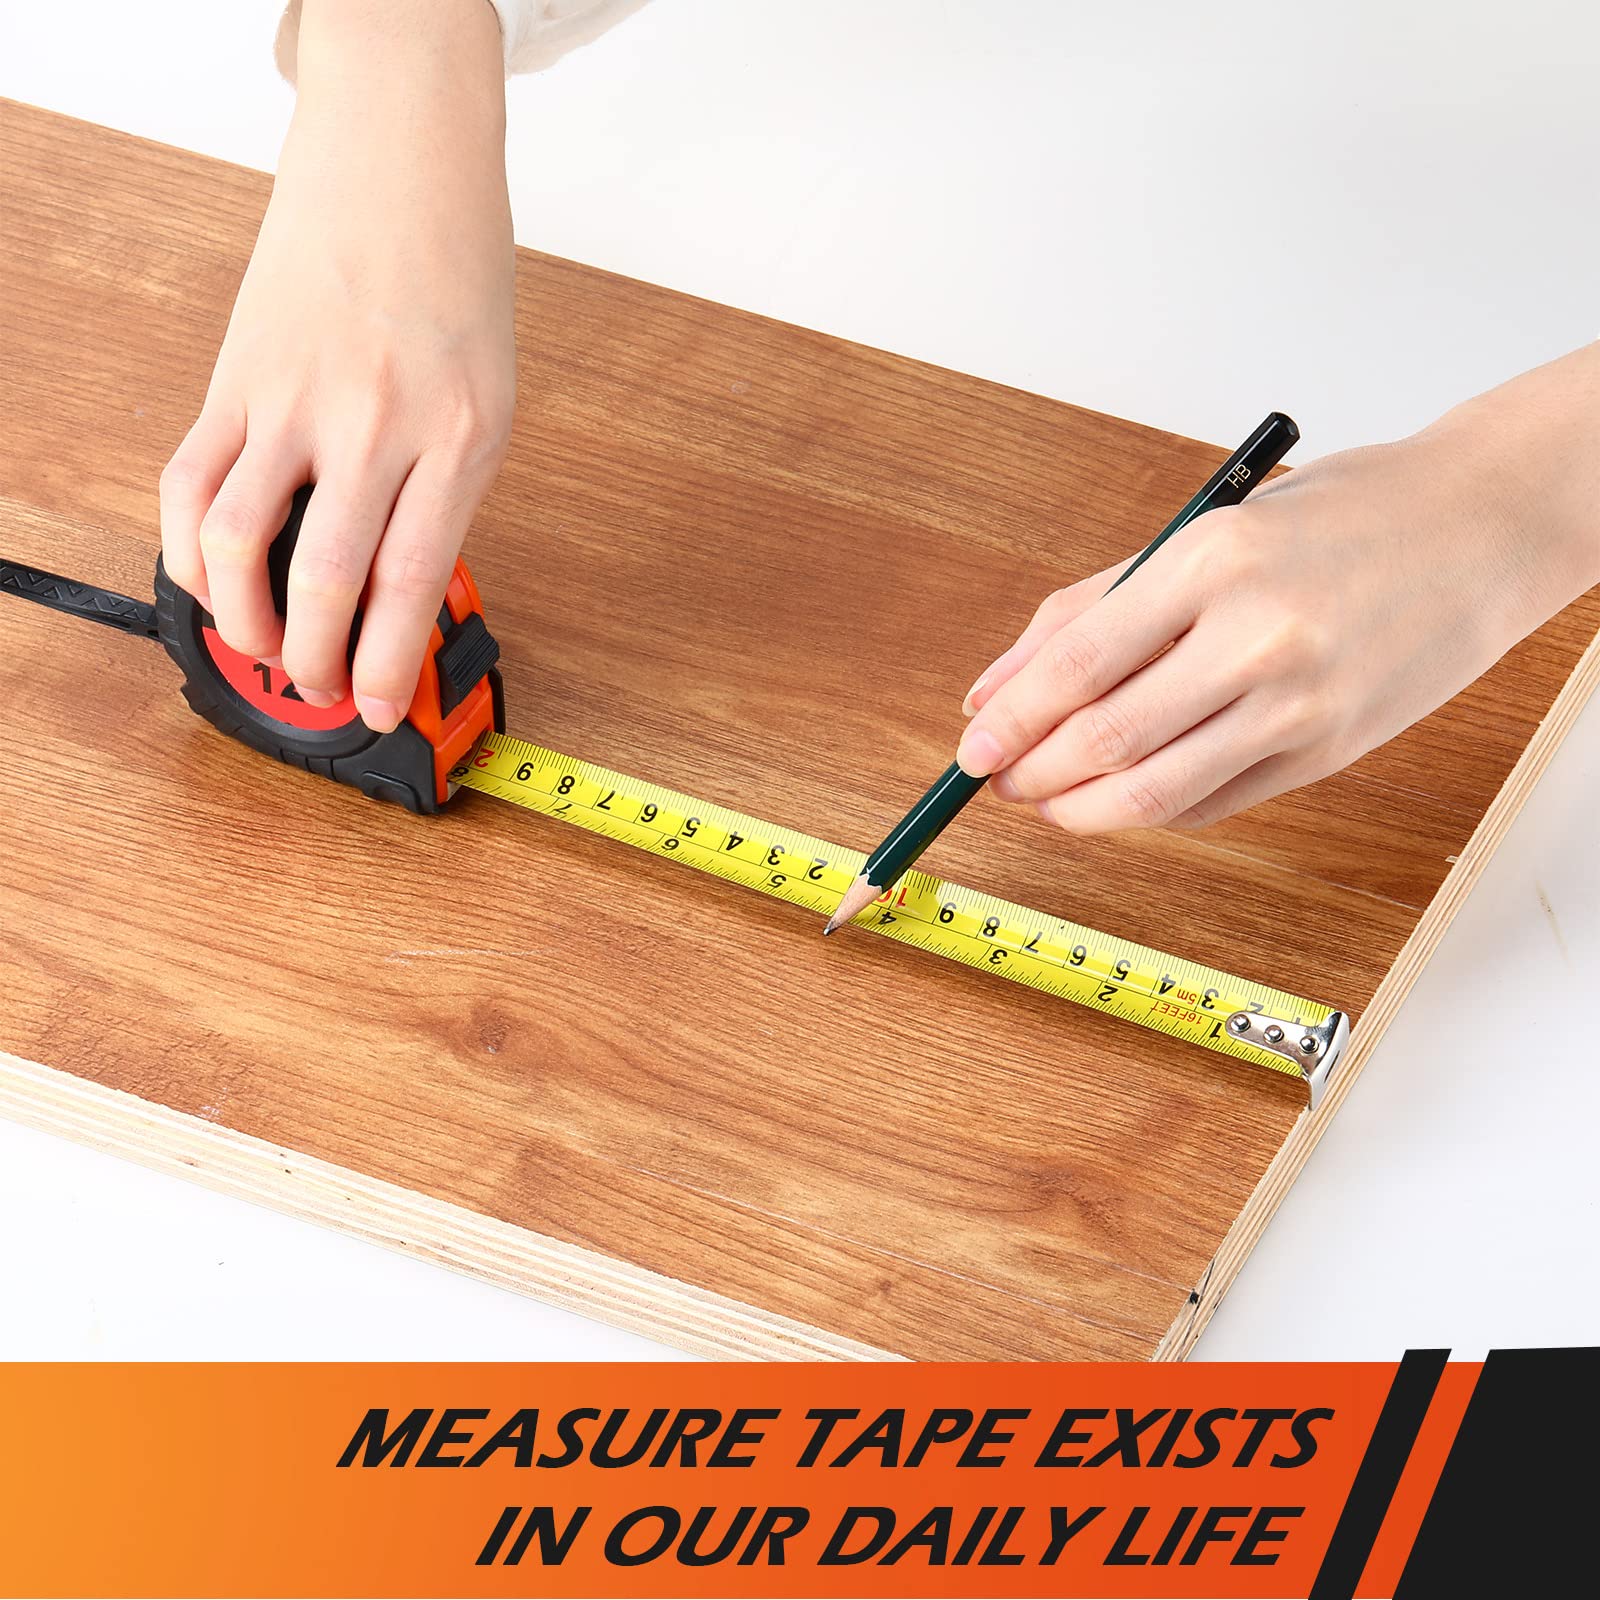 20 Pieces Tape Measure 12 Feet Measuring Tape Easy Read Measurement Tape Retractable Tape Measurer with Fractions 1/8 Measurement